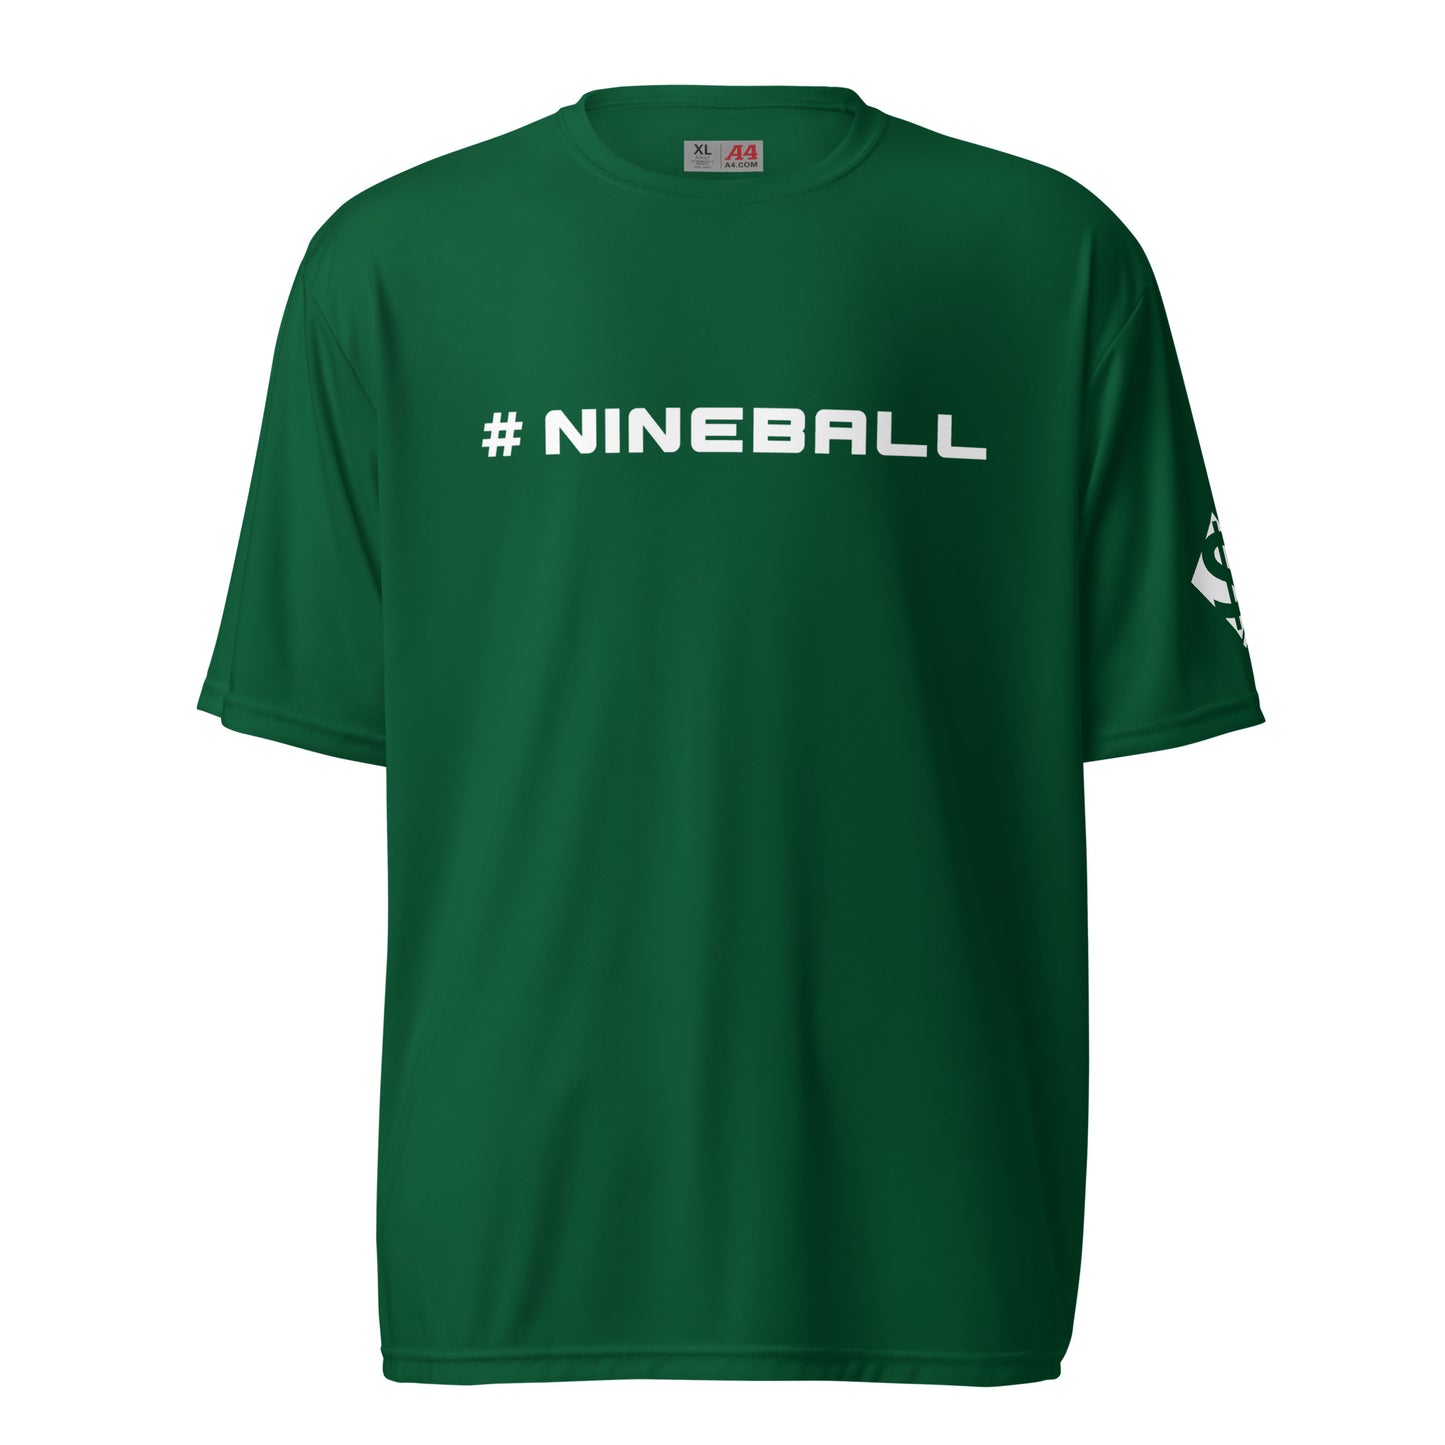 # NINEBALL